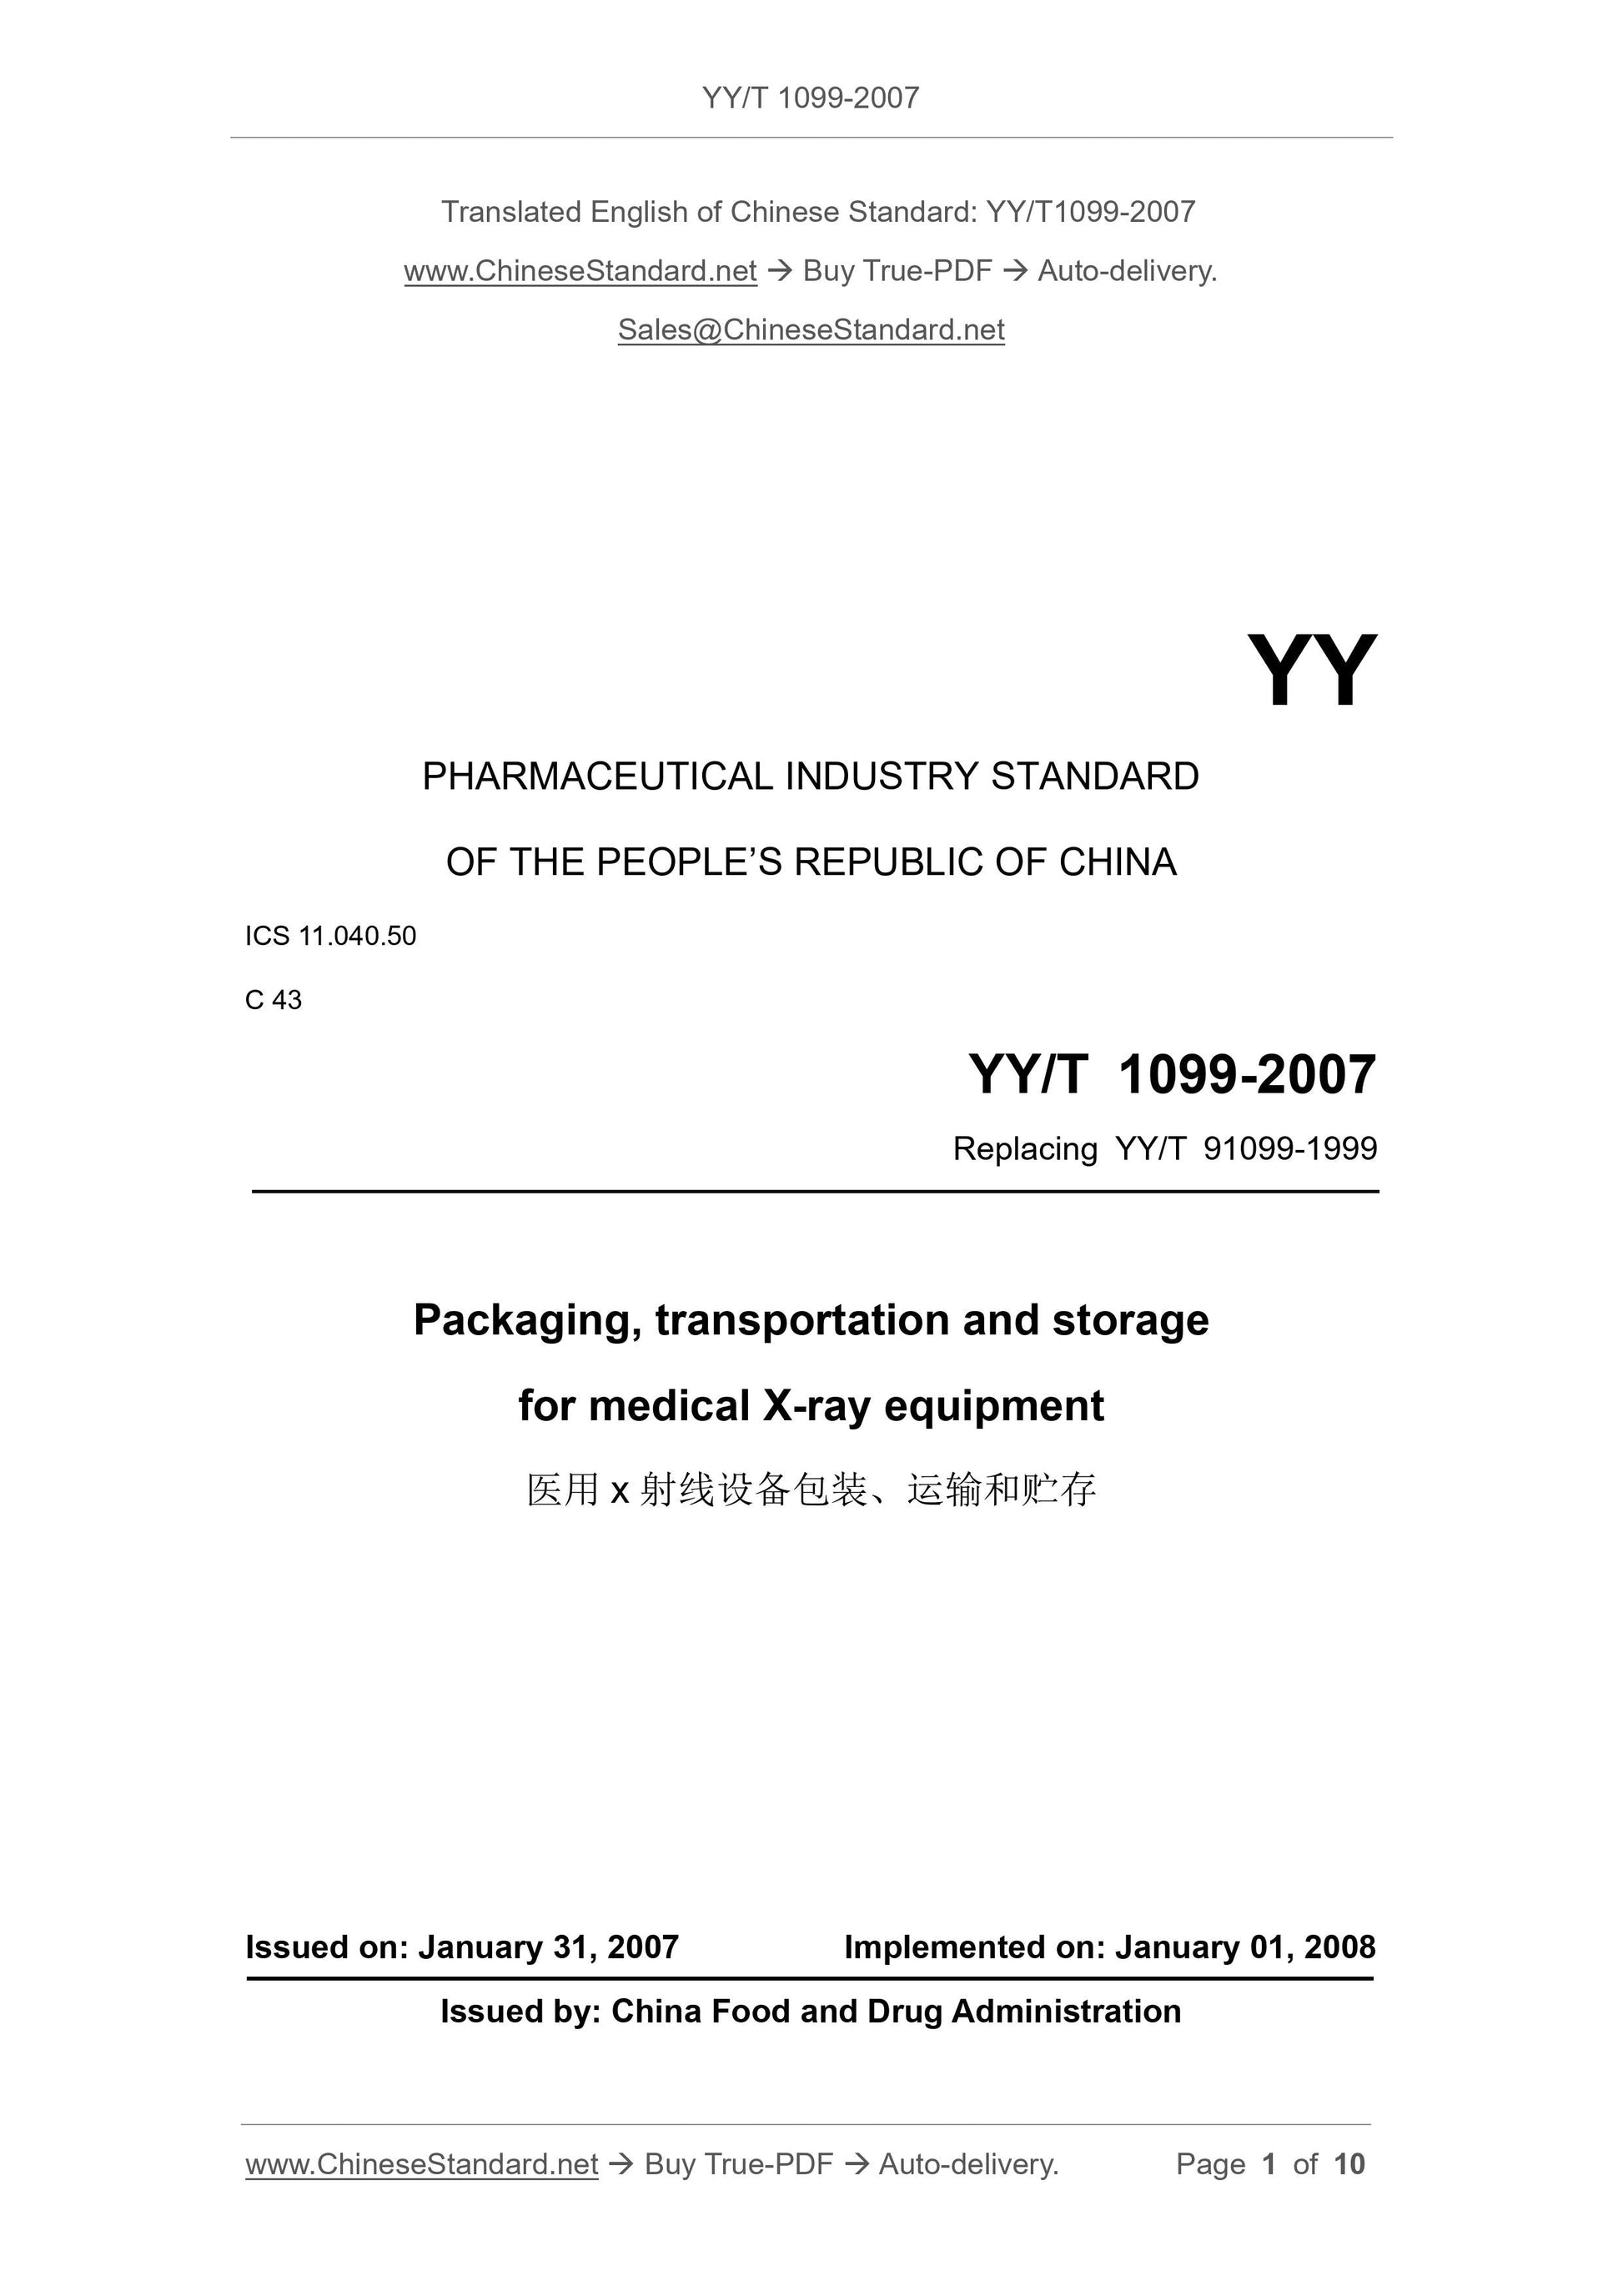 YY/T 1099-2007 Page 1